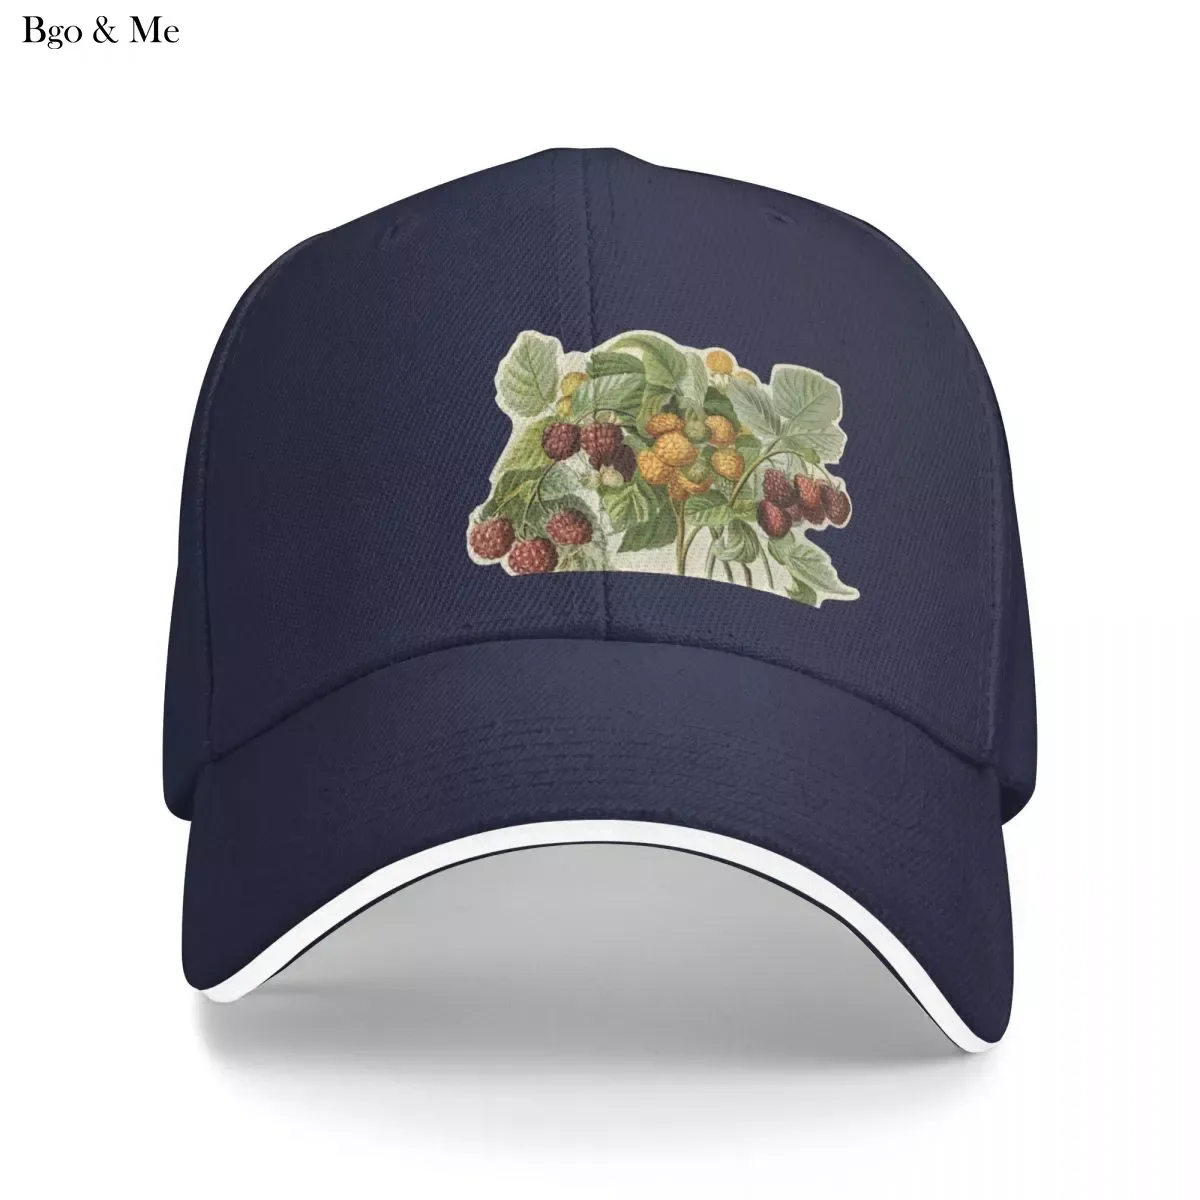 

2023 New Here We Go Round The Mulberry Bush Baseball Cap Caps Luxury Hat Big Size Hat Trucker Hats For Men Women'S